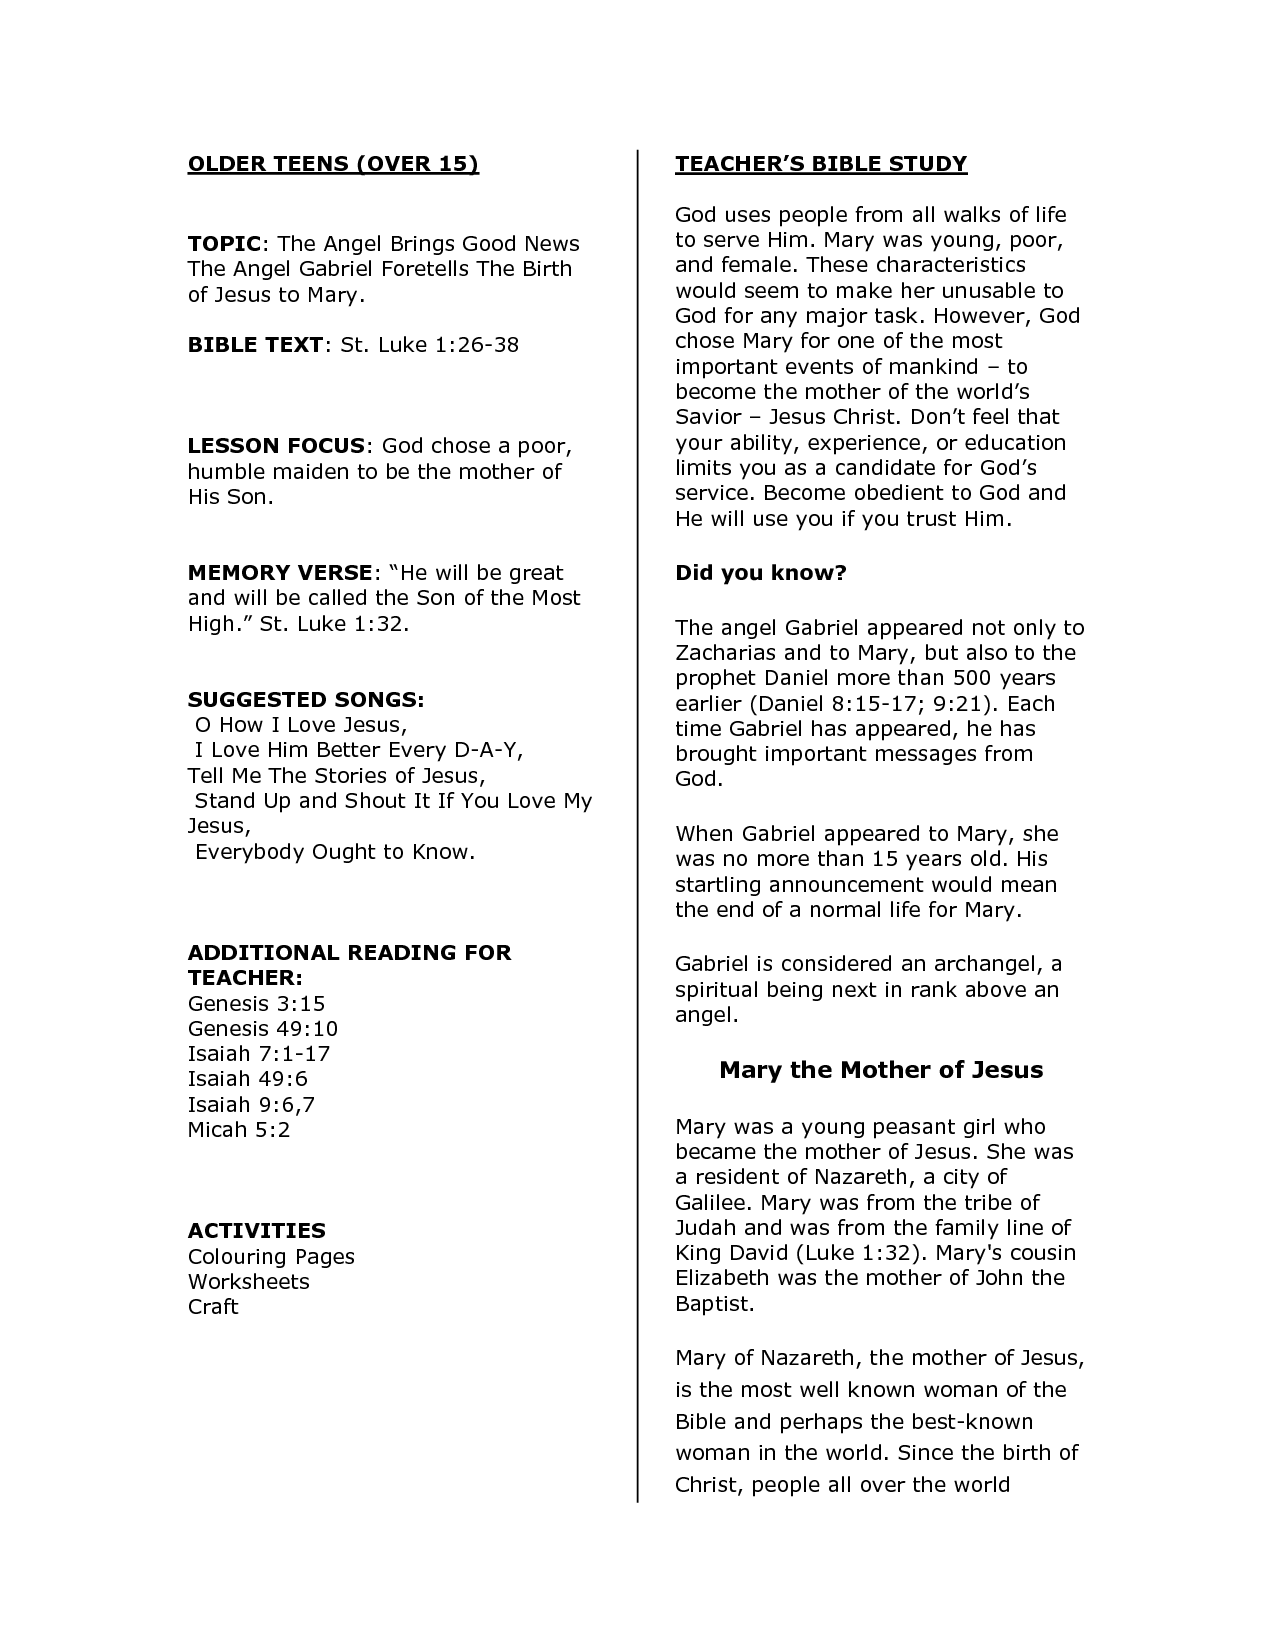 Free Printable Teen Bible Study Worksheets